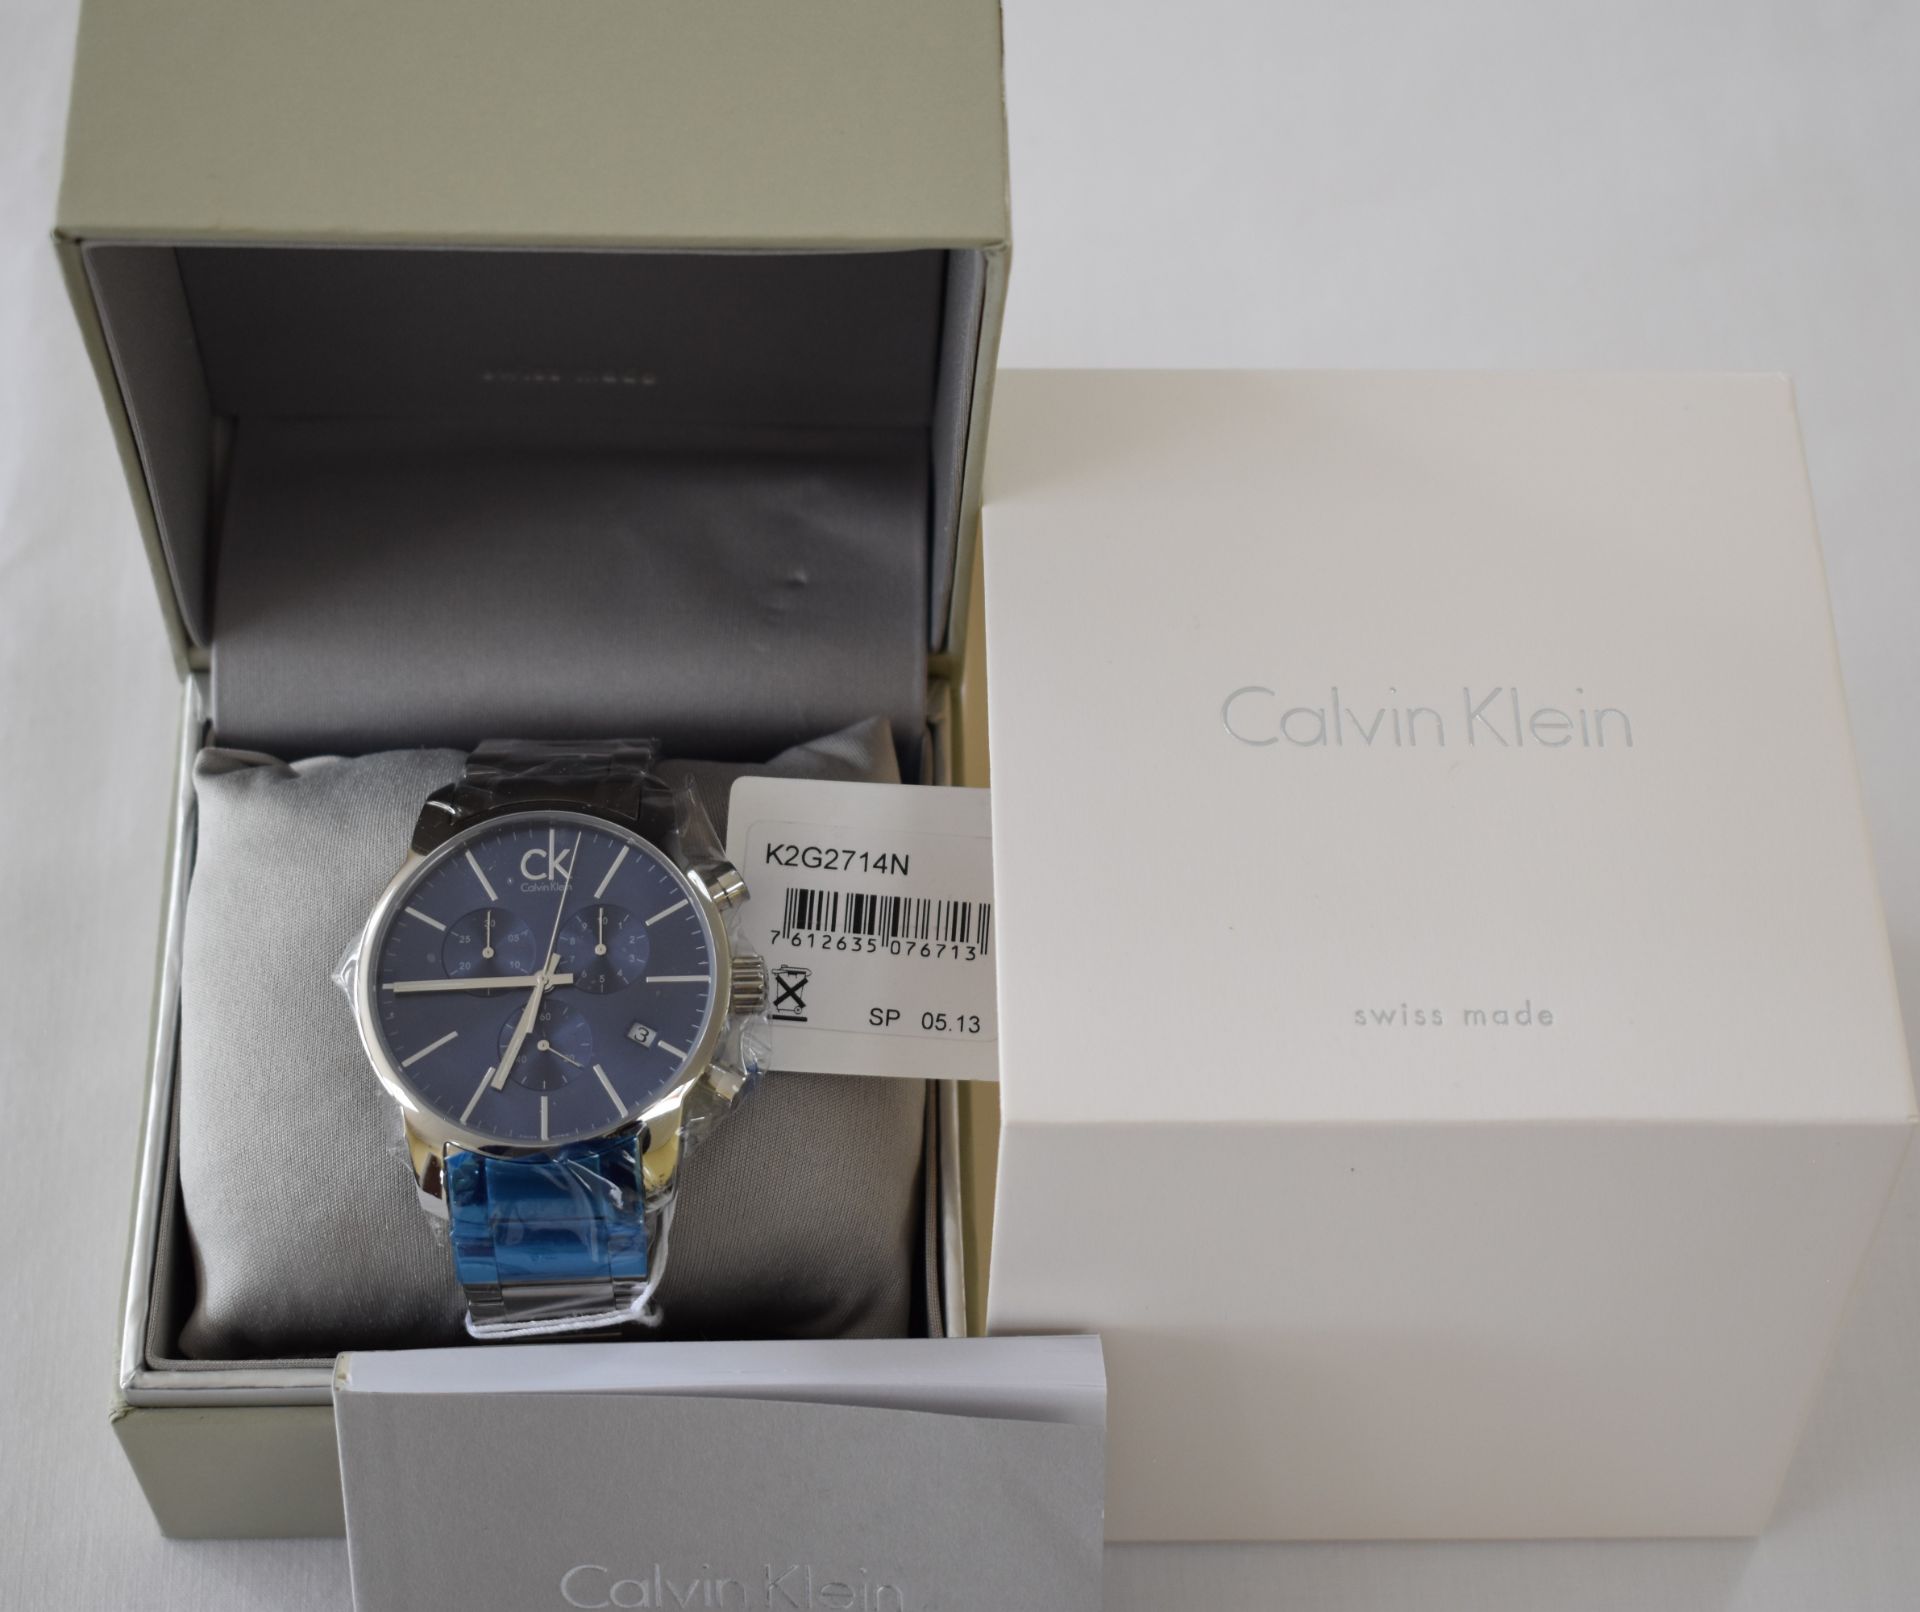 Calvin Klein K2G2714N Men's Watch - Image 2 of 2